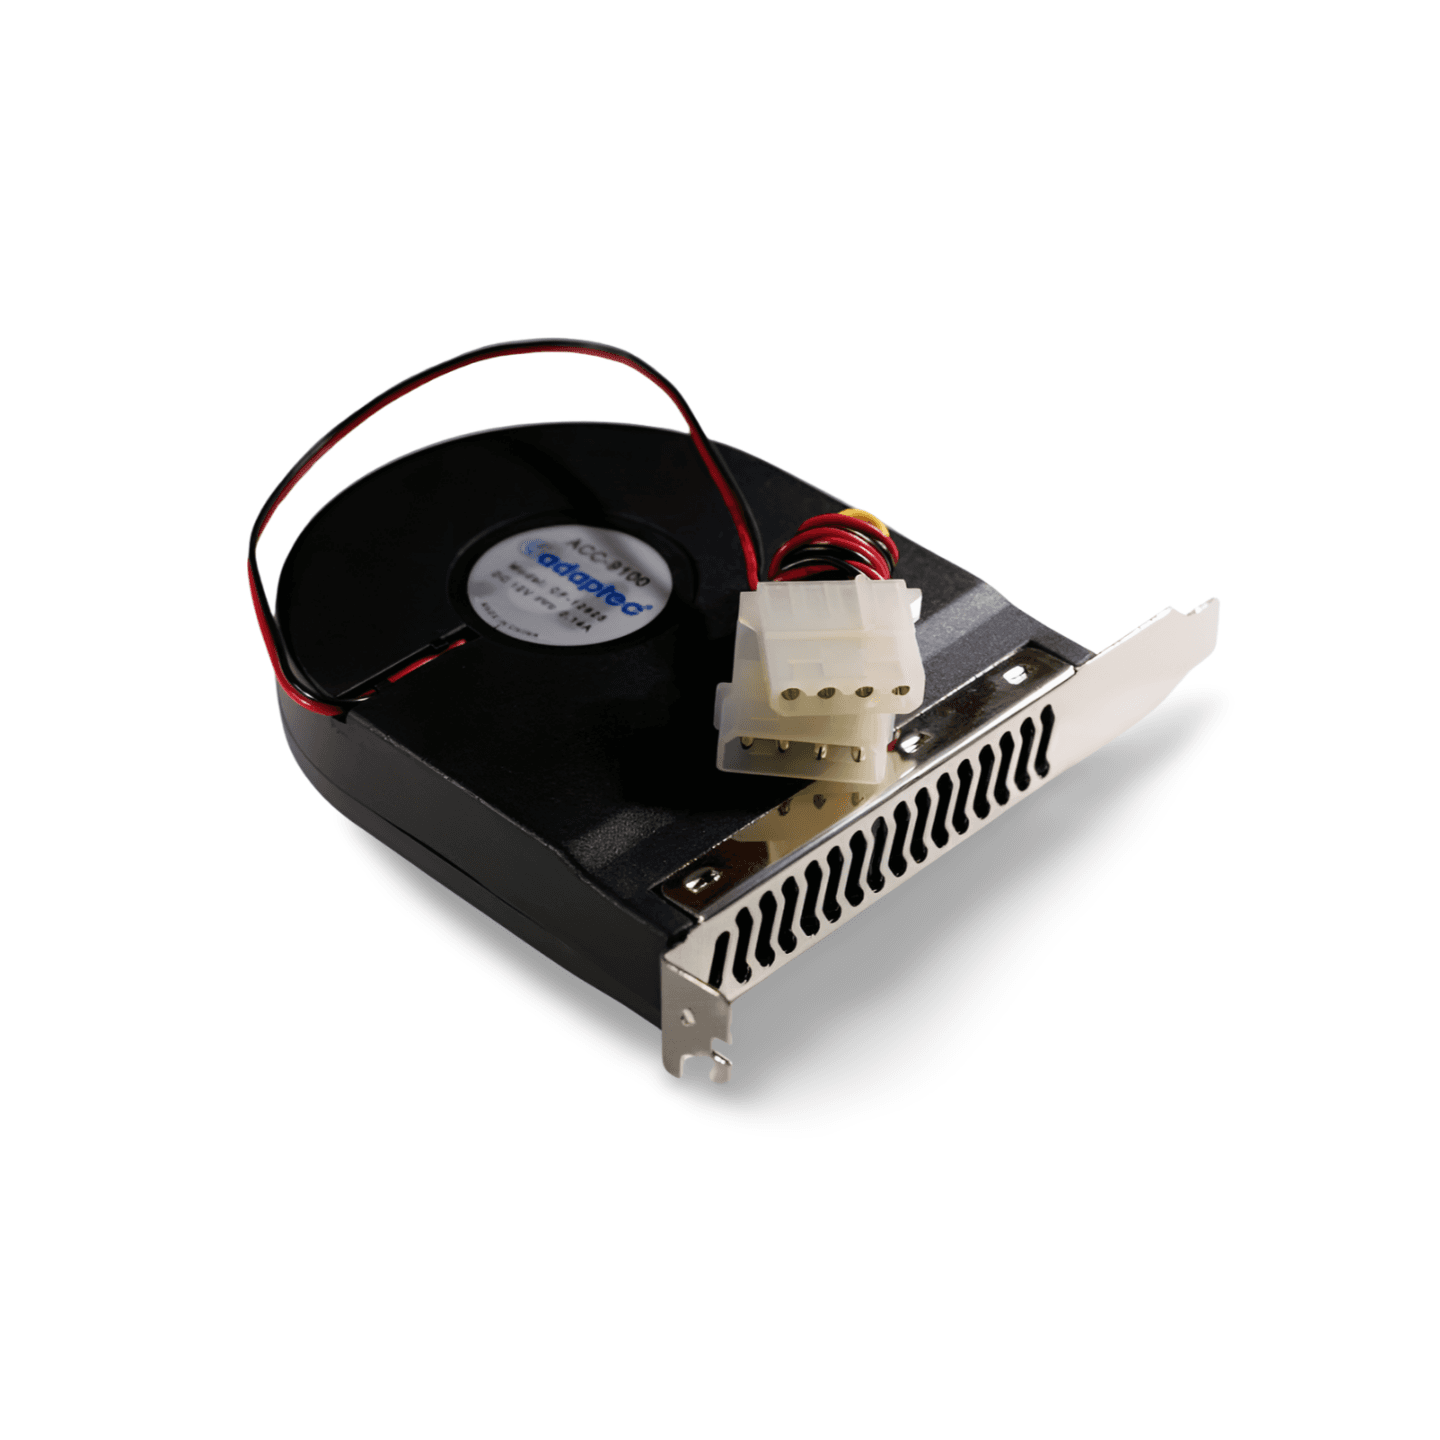 PC Case Cooling Fan by Adaptec black